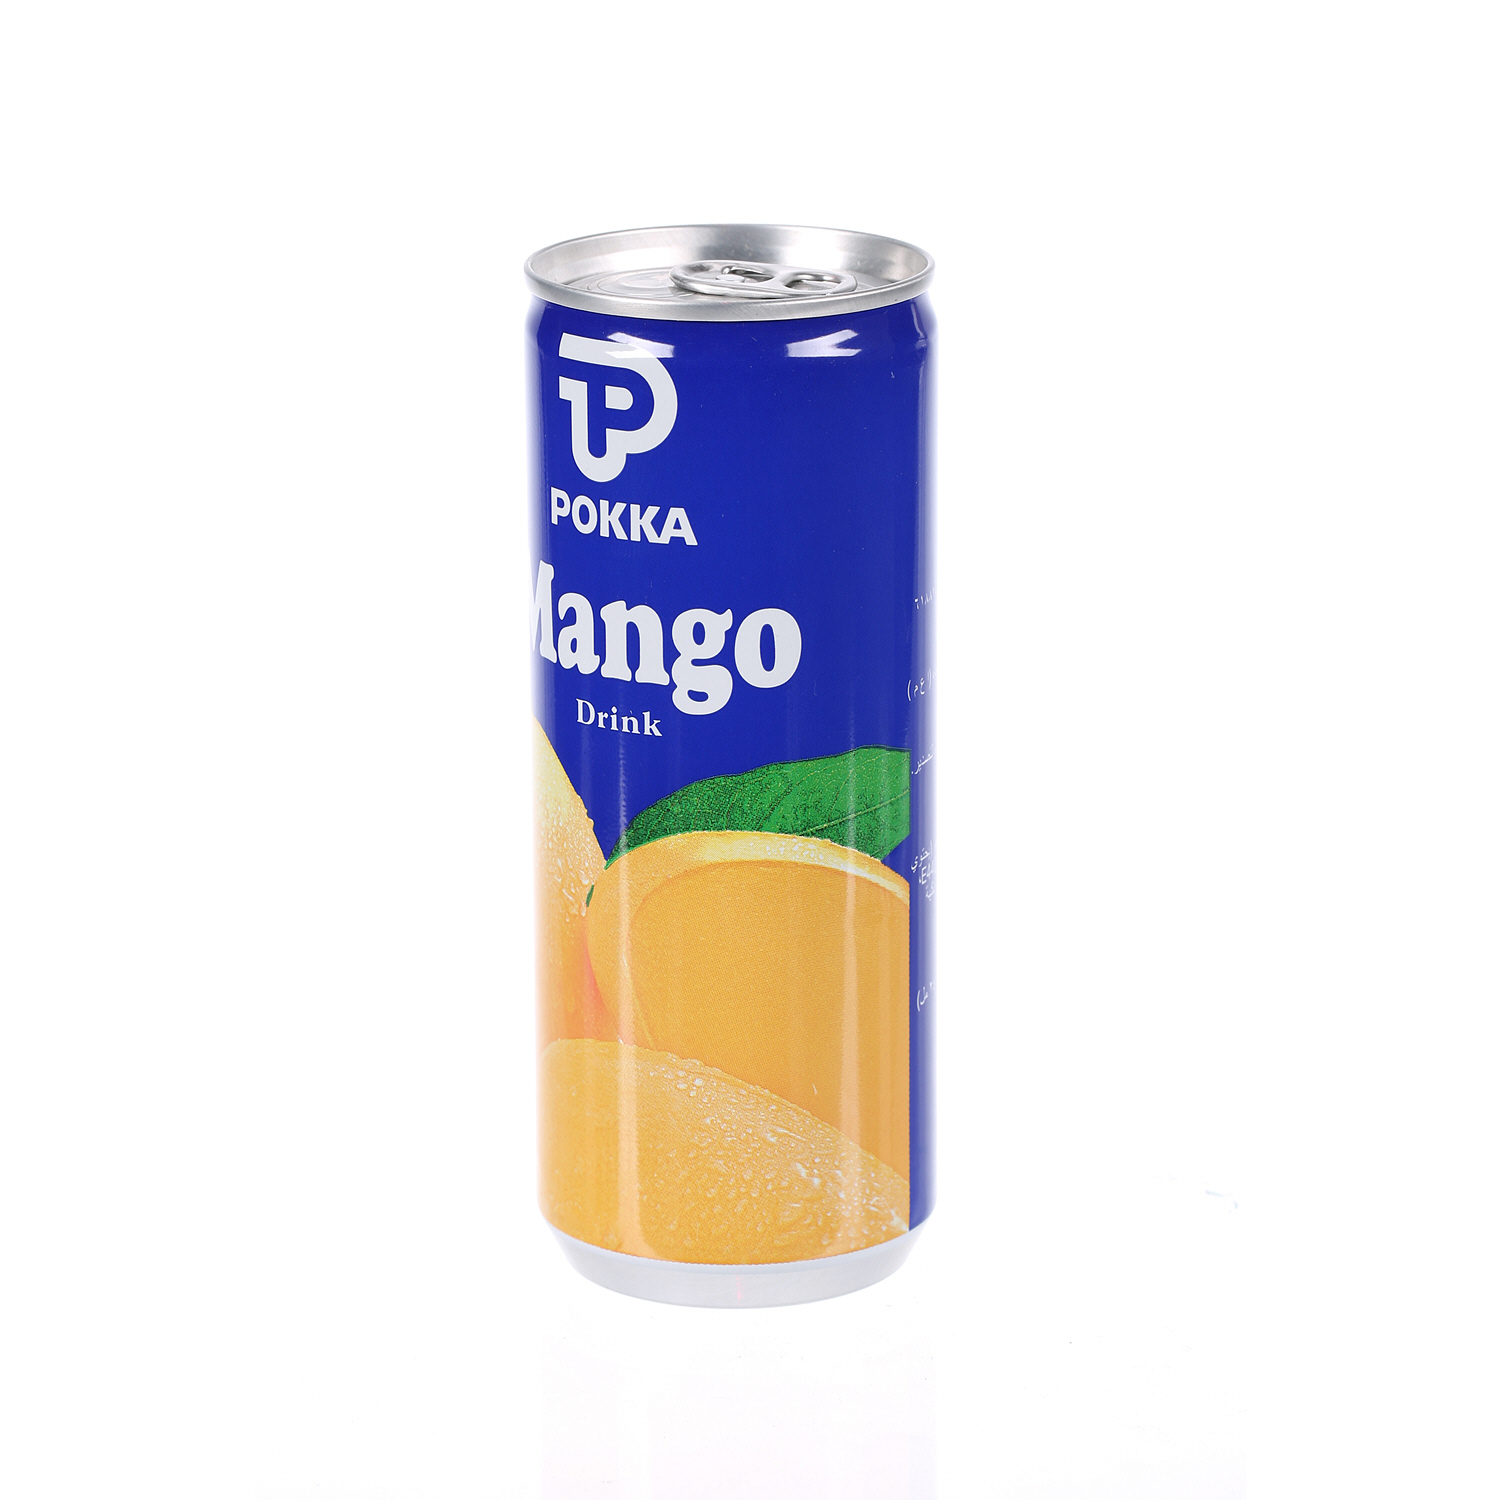 Pokka Mango Drink Juice 240ml